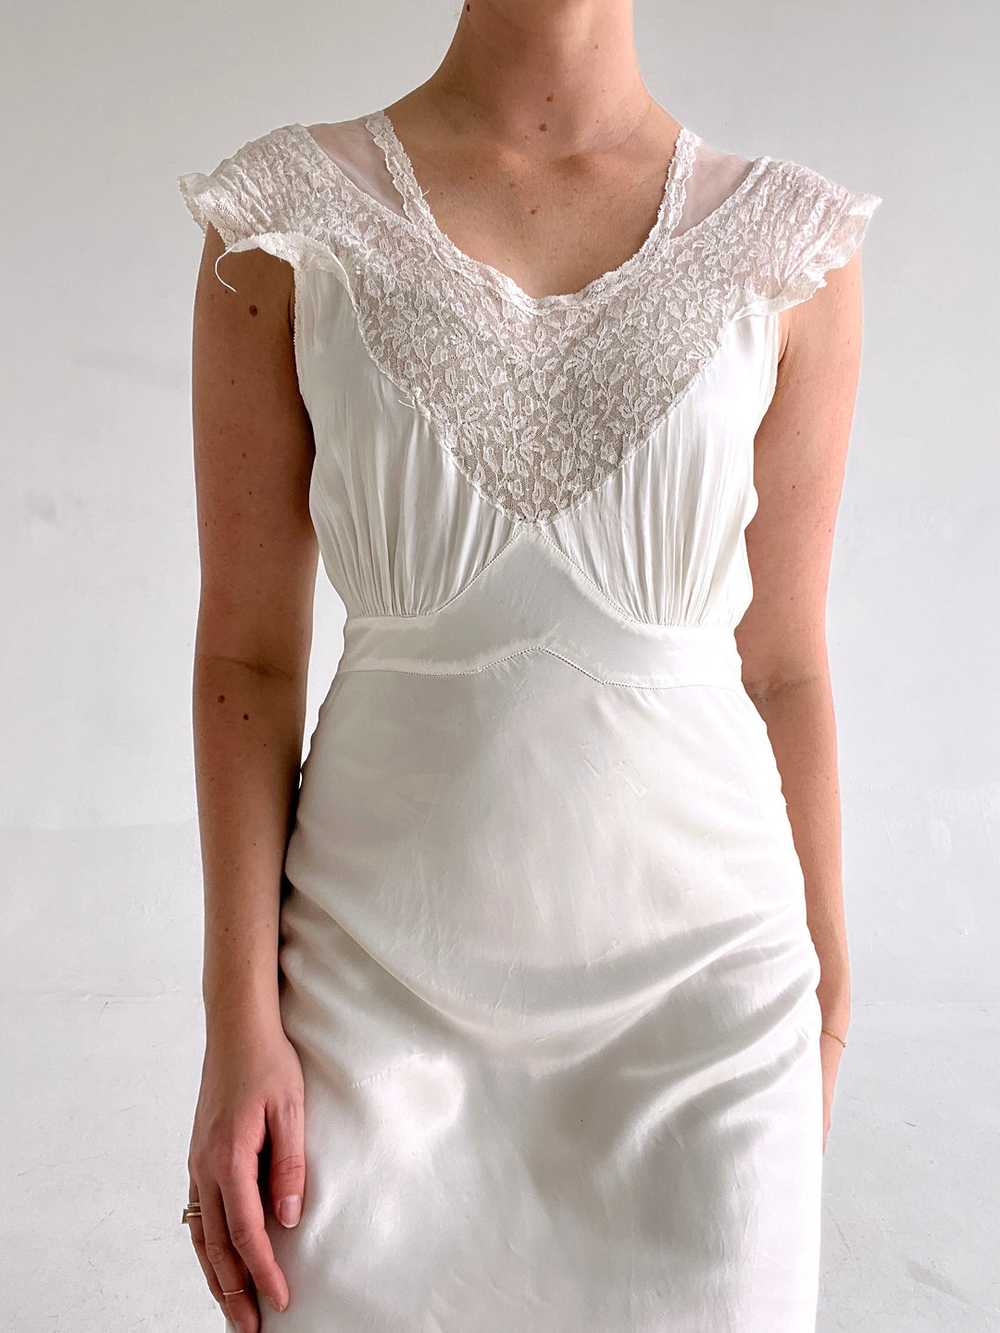 1930's Bridal White Slip Dress with White Lace - image 1